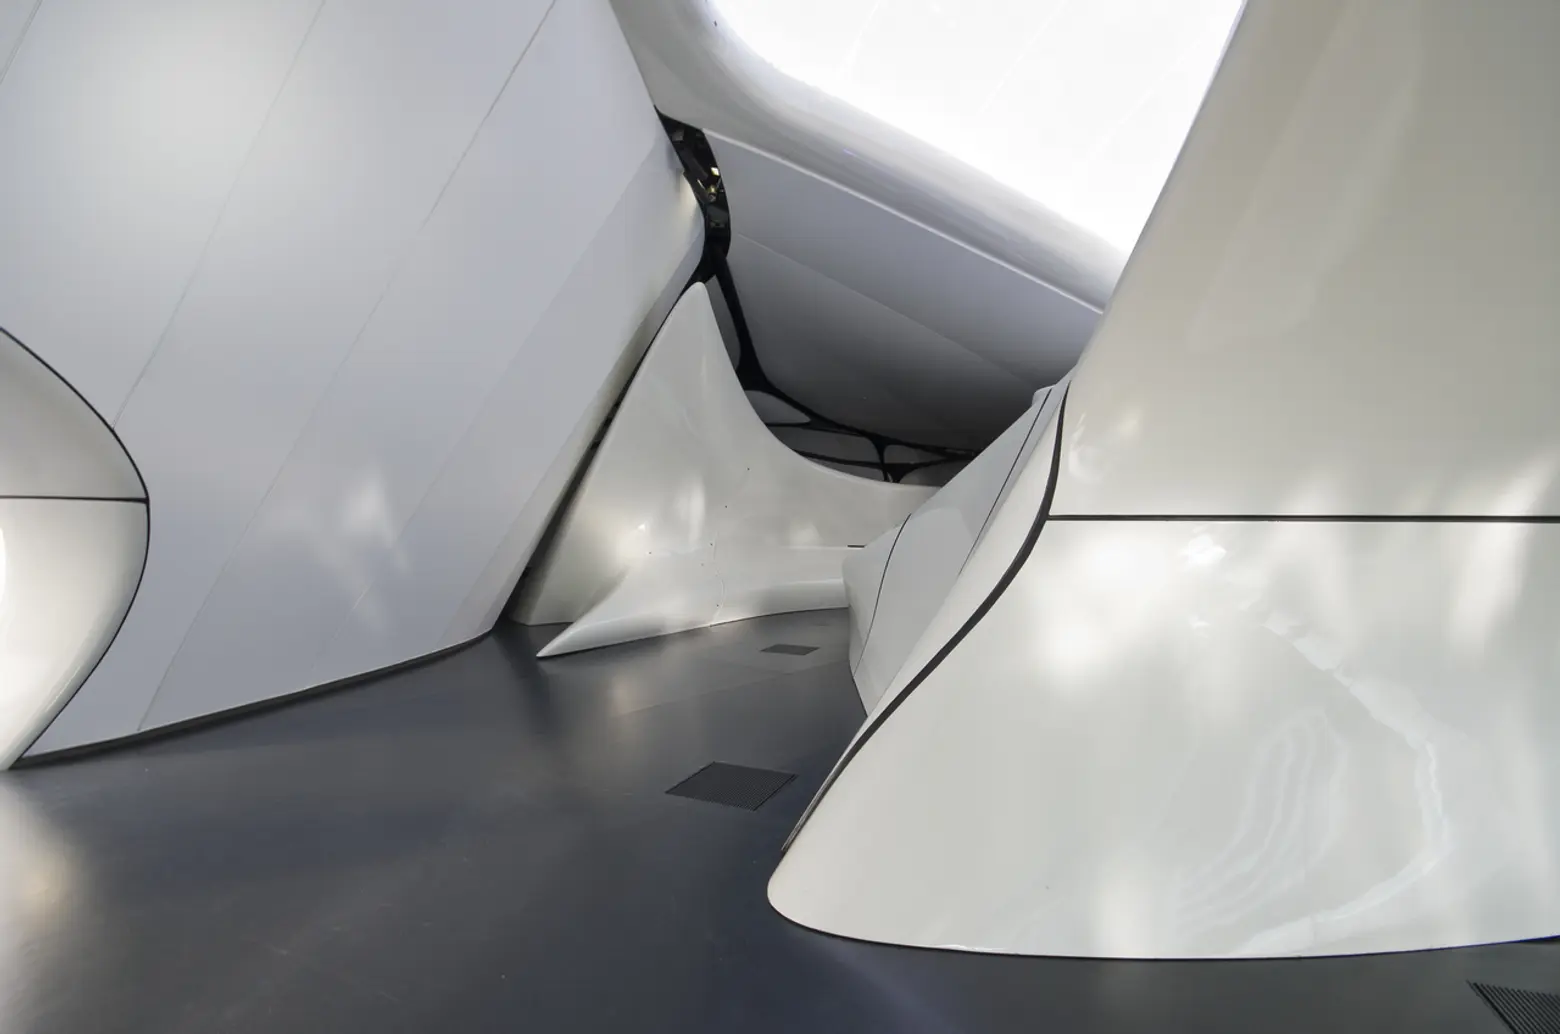 Chanel Mobile Art Pavilion, Zaha Hadid, public art projects, starchitecture